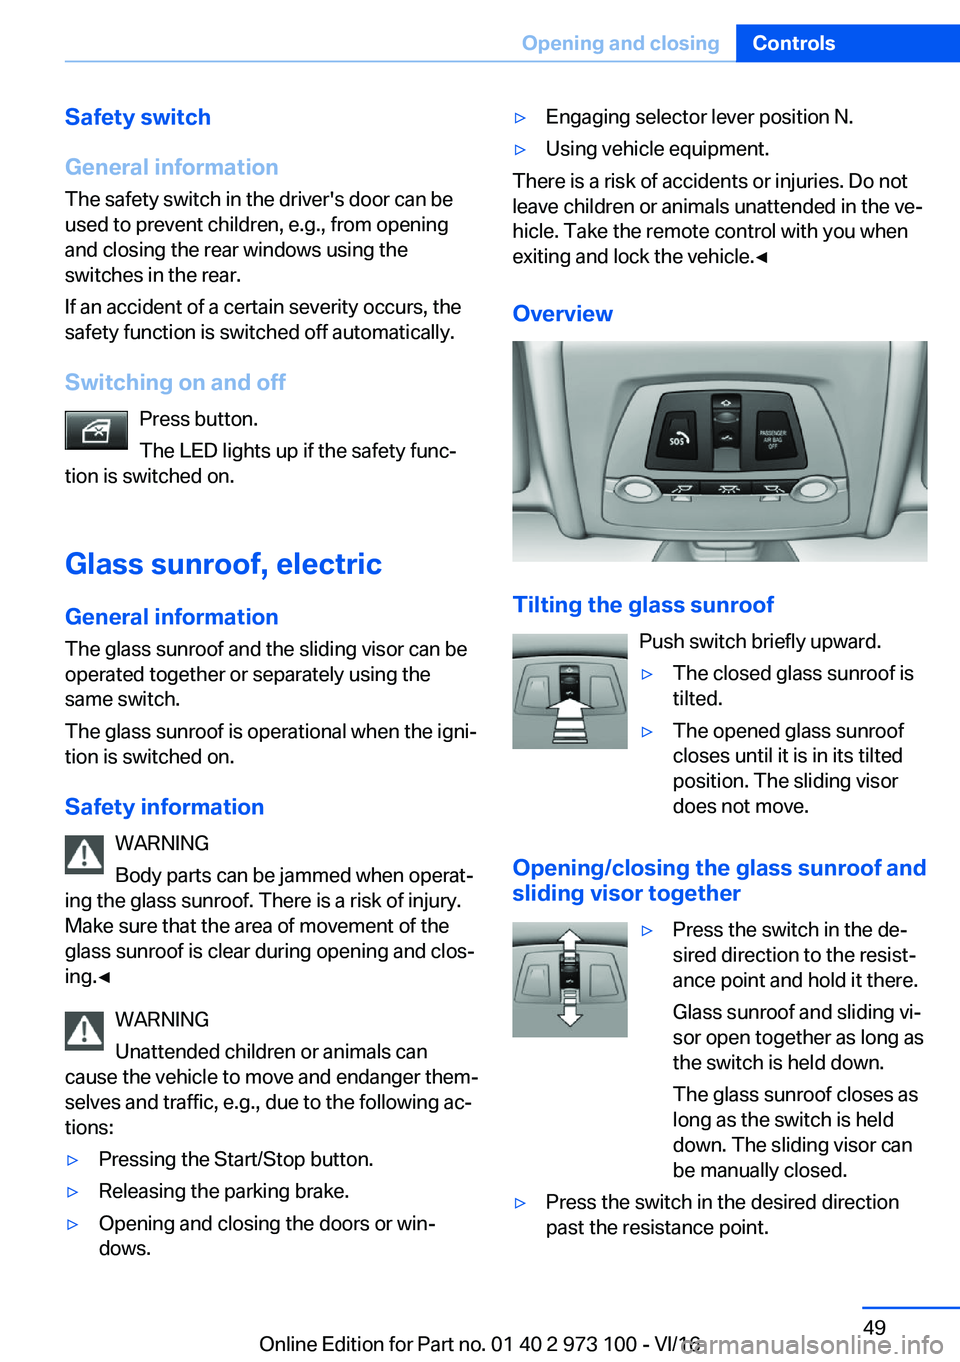 BMW X4 2017 Service Manual �S�a�f�e�t�y��s�w�i�t�c�h
�G�e�n�e�r�a�l��i�n�f�o�r�m�a�t�i�o�n
�T�h�e� �s�a�f�e�t�y� �s�w�i�t�c�h� �i�n� �t�h�e� �d�r�i�v�e�r�'�s� �d�o�o�r� �c�a�n� �b�e
�u�s�e�d� �t�o� �p�r�e�v�e�n�t� �c�h�i�